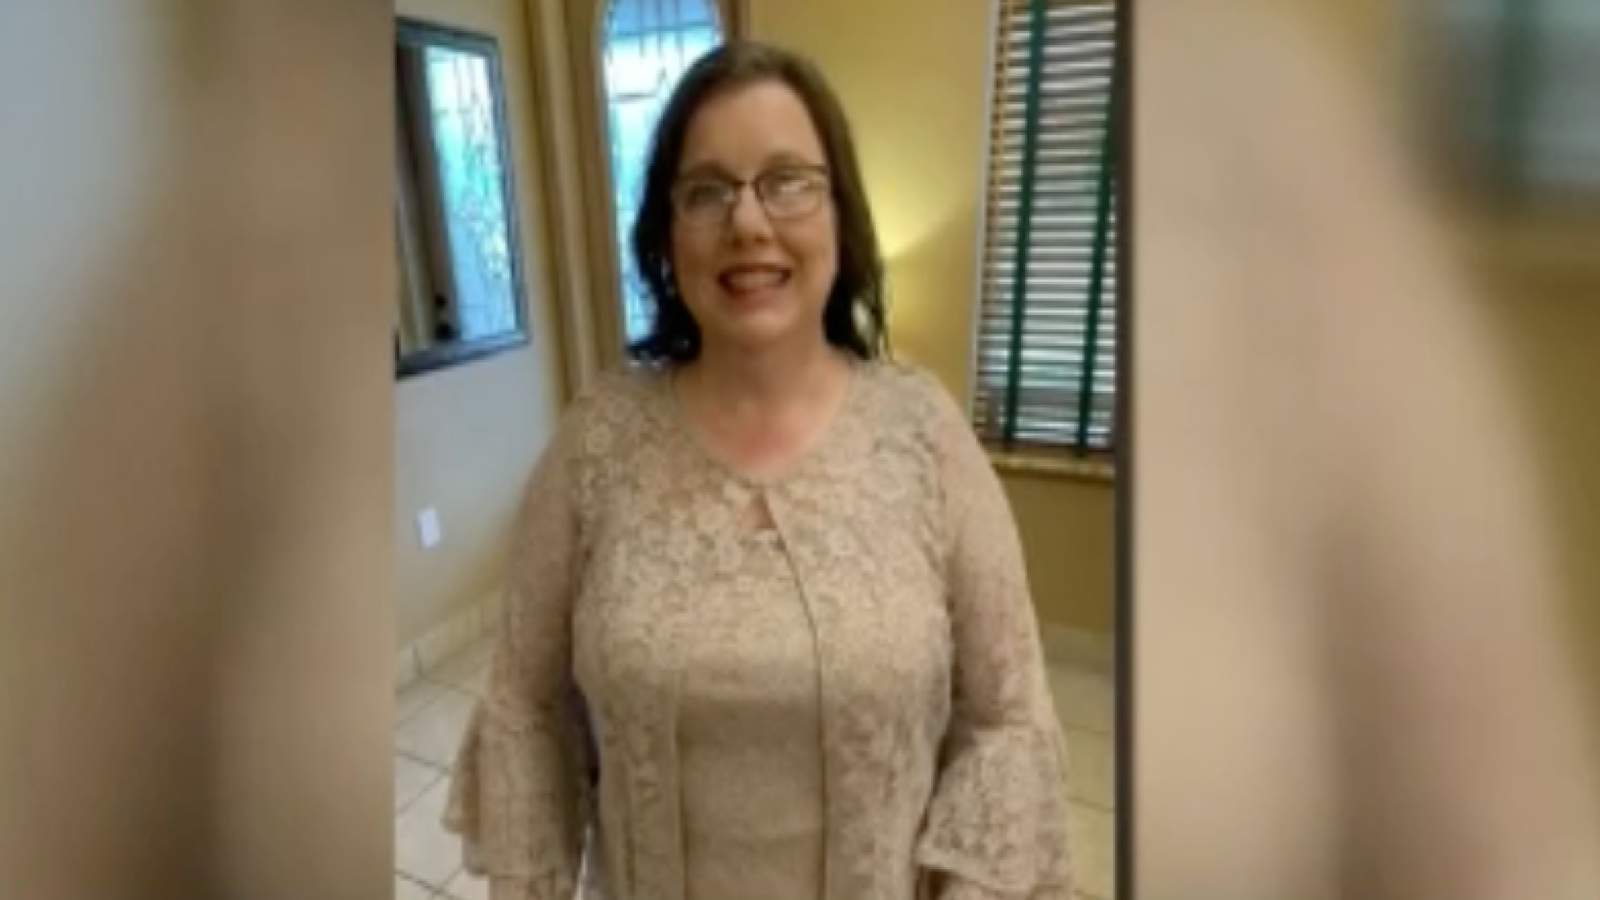 Morton Ranch school nurse remembered as joyful caretaker